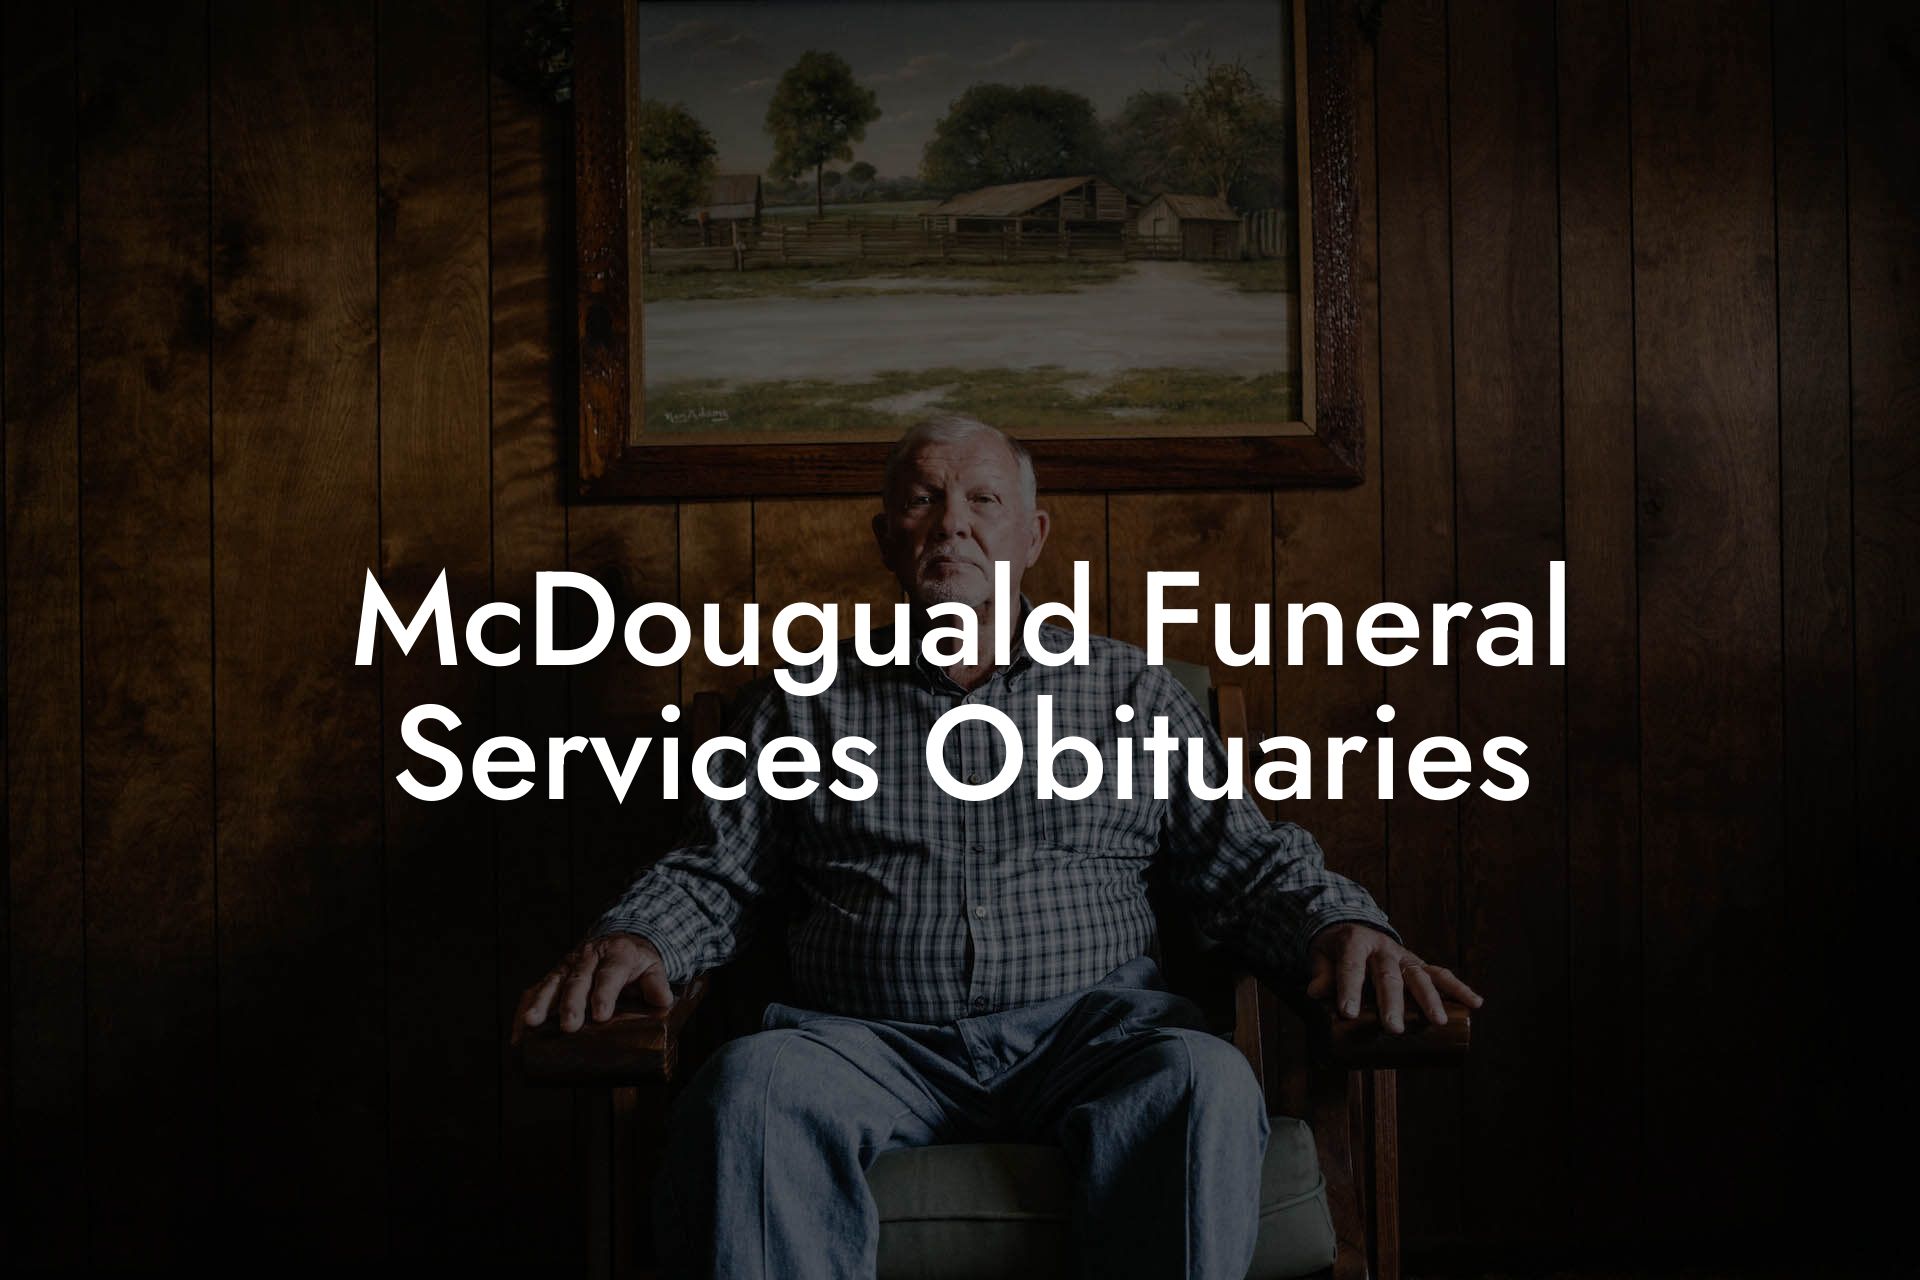 McDouguald Funeral Services Obituaries